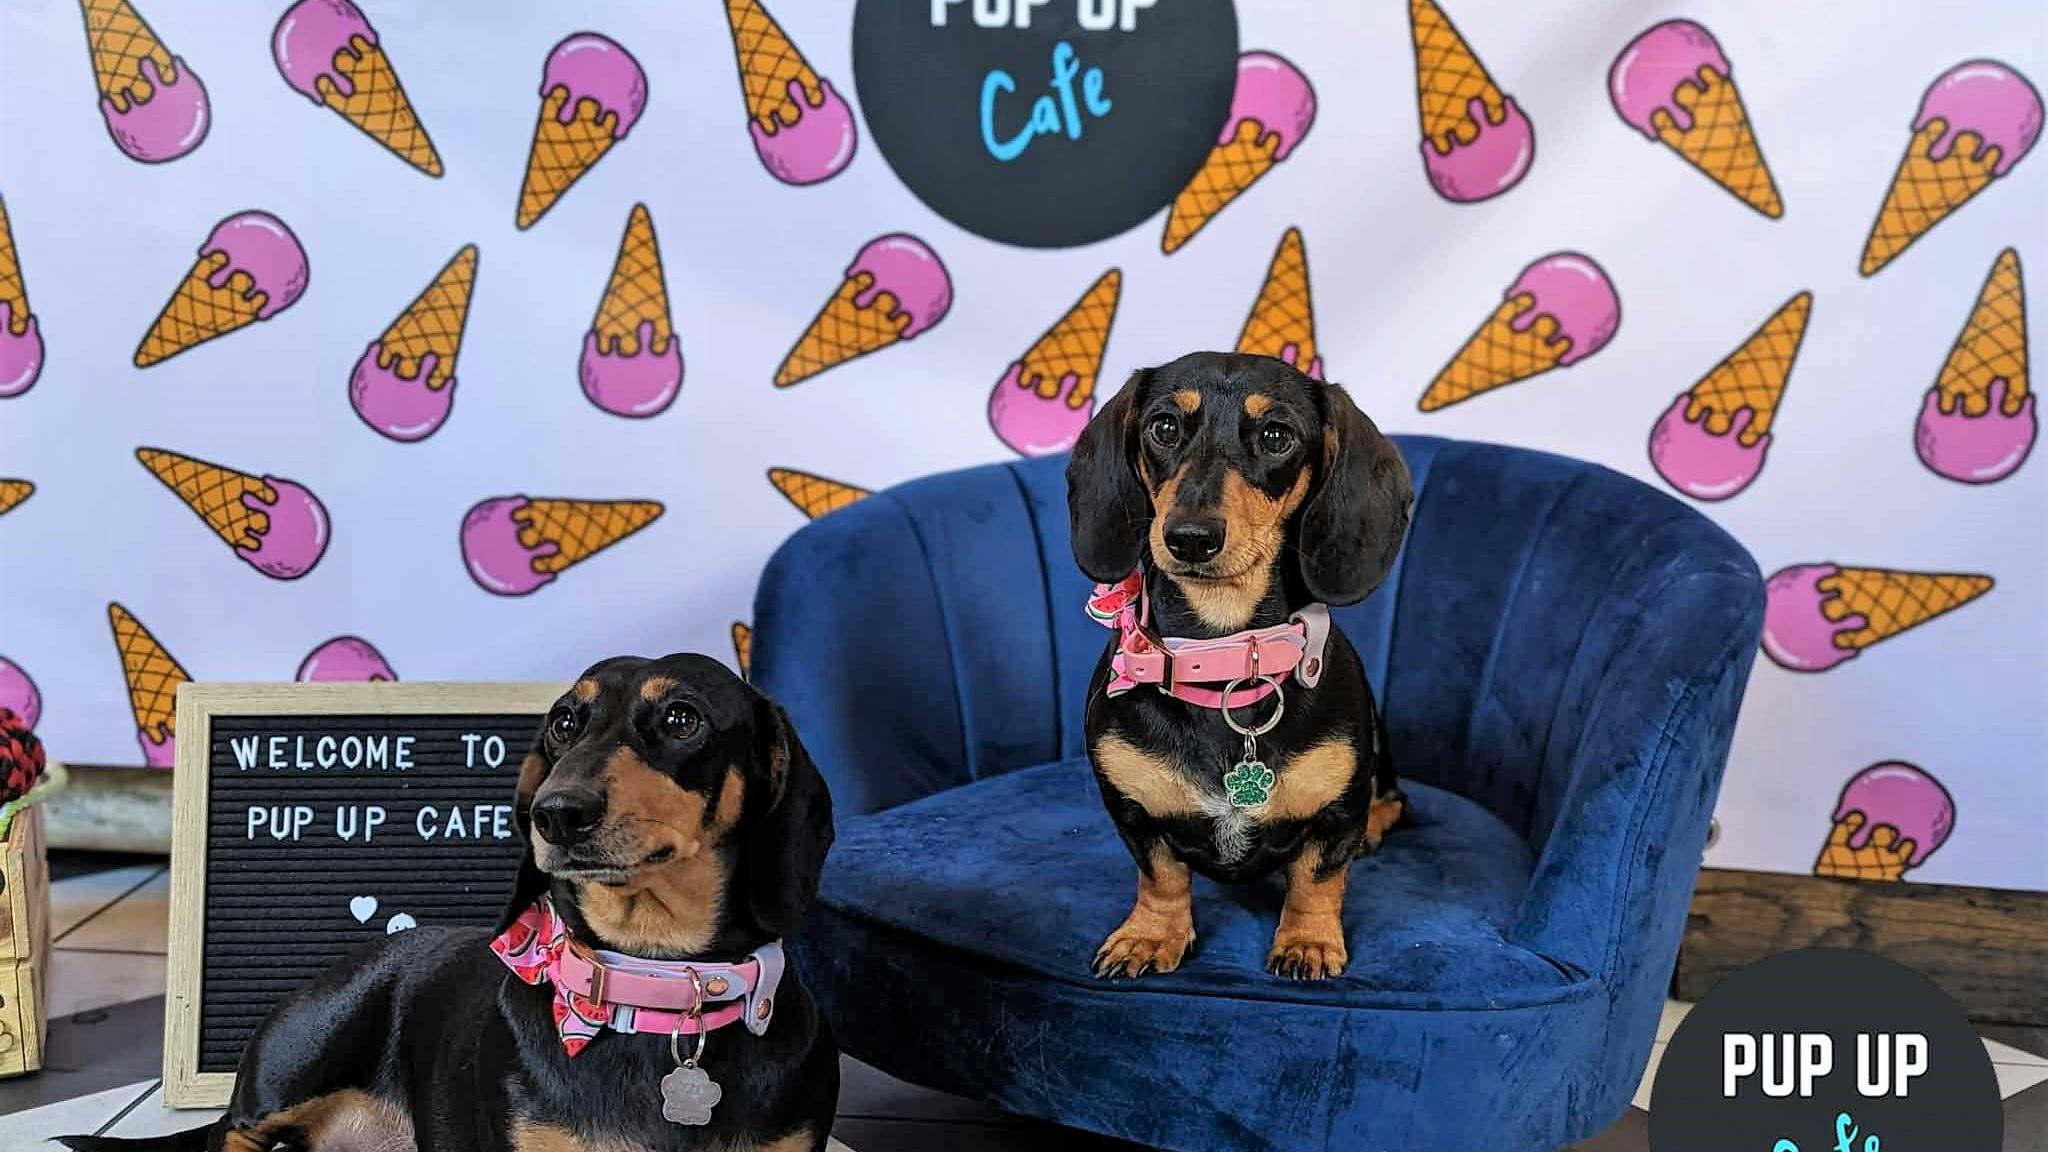 Dogs descend on Revolution cocktail bar for ‘Pup up Cafe’ event